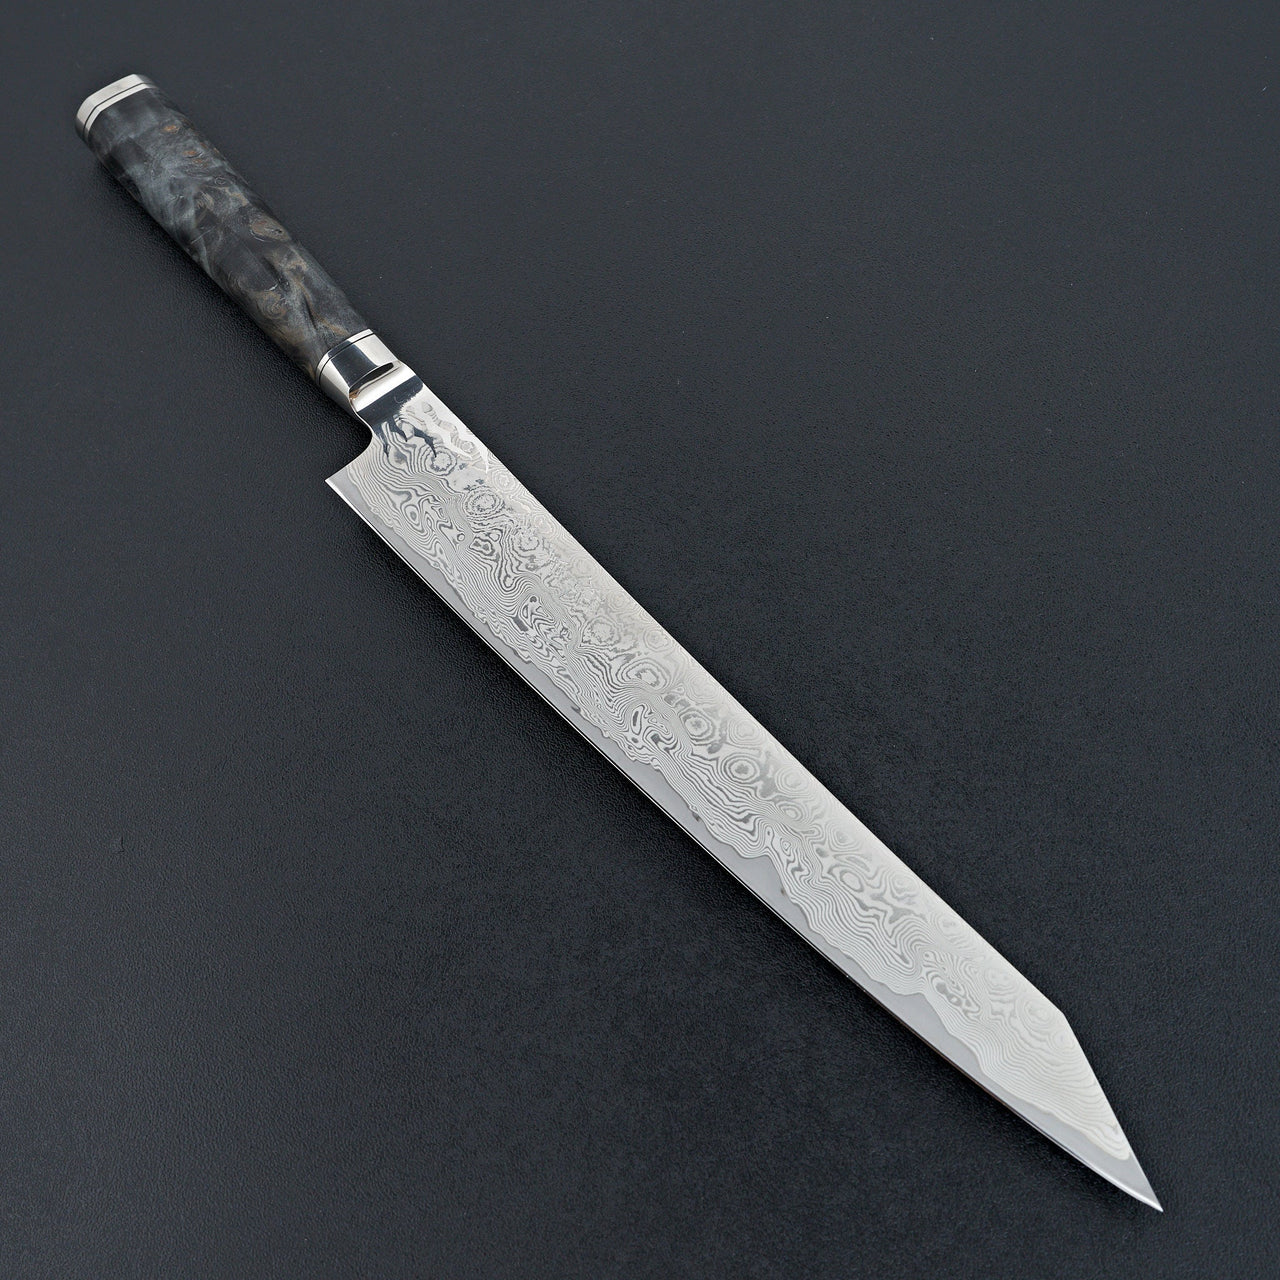 Ryusen Oukokuryu Wa Sujihiki 260mm-Knife-Ryusen-Carbon Knife Co